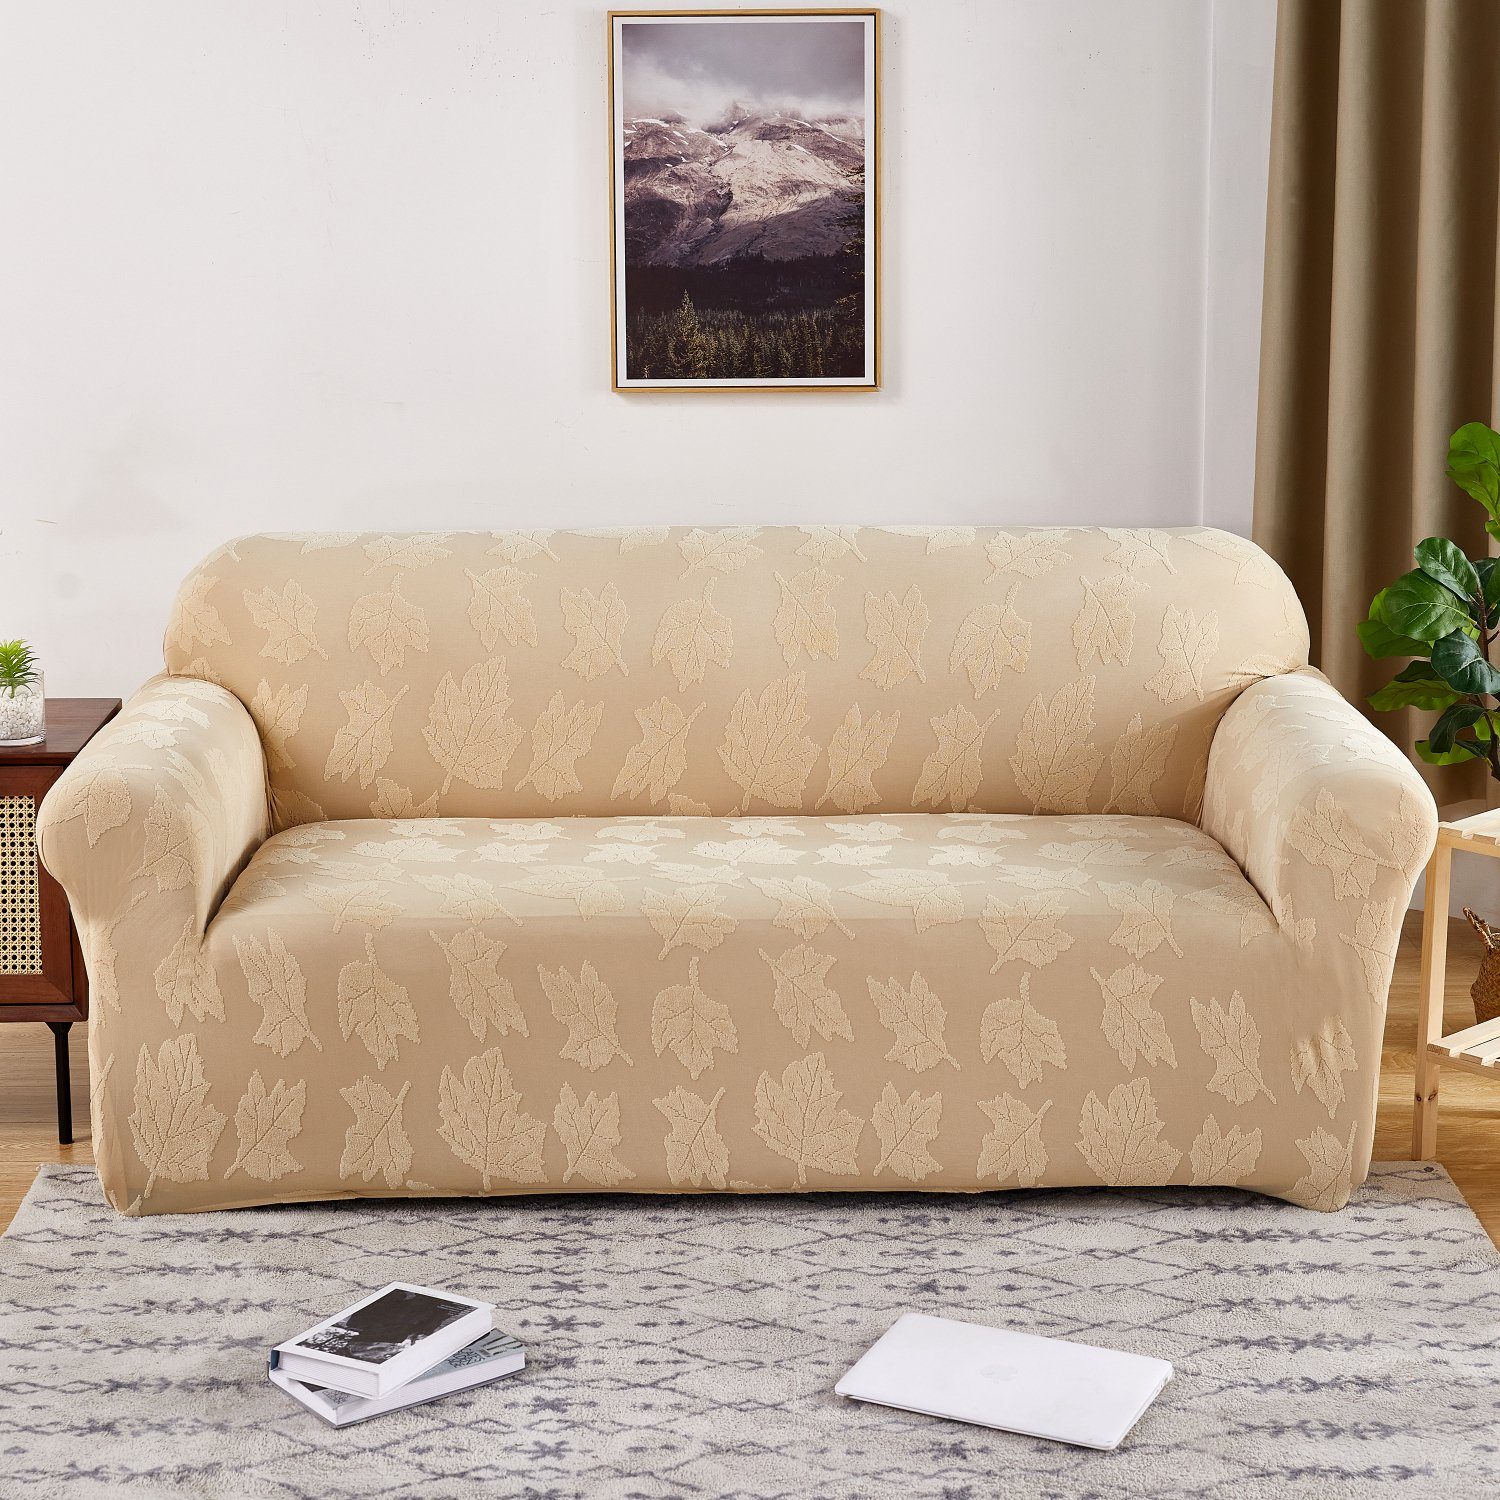 Sofahusse, HOMEIDEAS, Stretch Jacquard-Couch-Sofabezüge, Möbelschutzbezug Beige-E